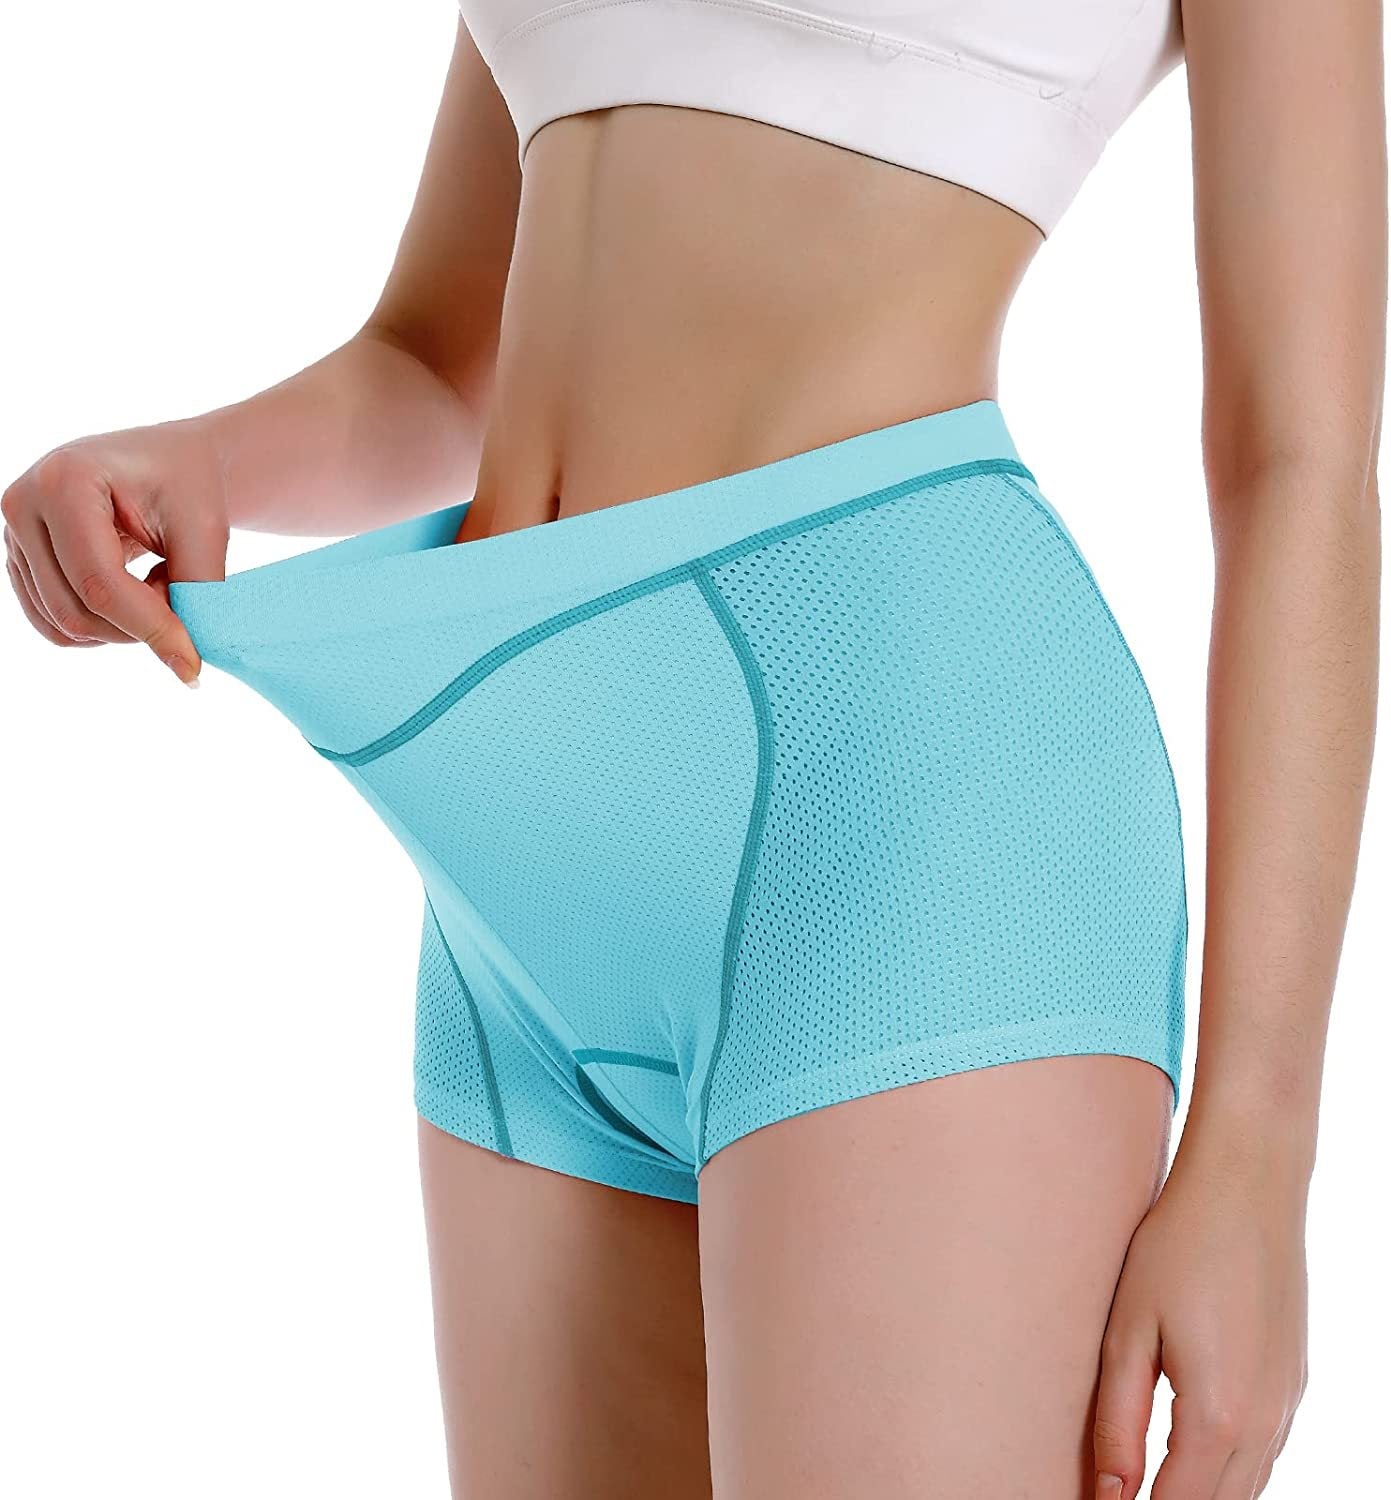 Women's Cycling Underwear, 4D Padded Gel Bike Shorts Lightweight Quick Dry Cycling Knickers